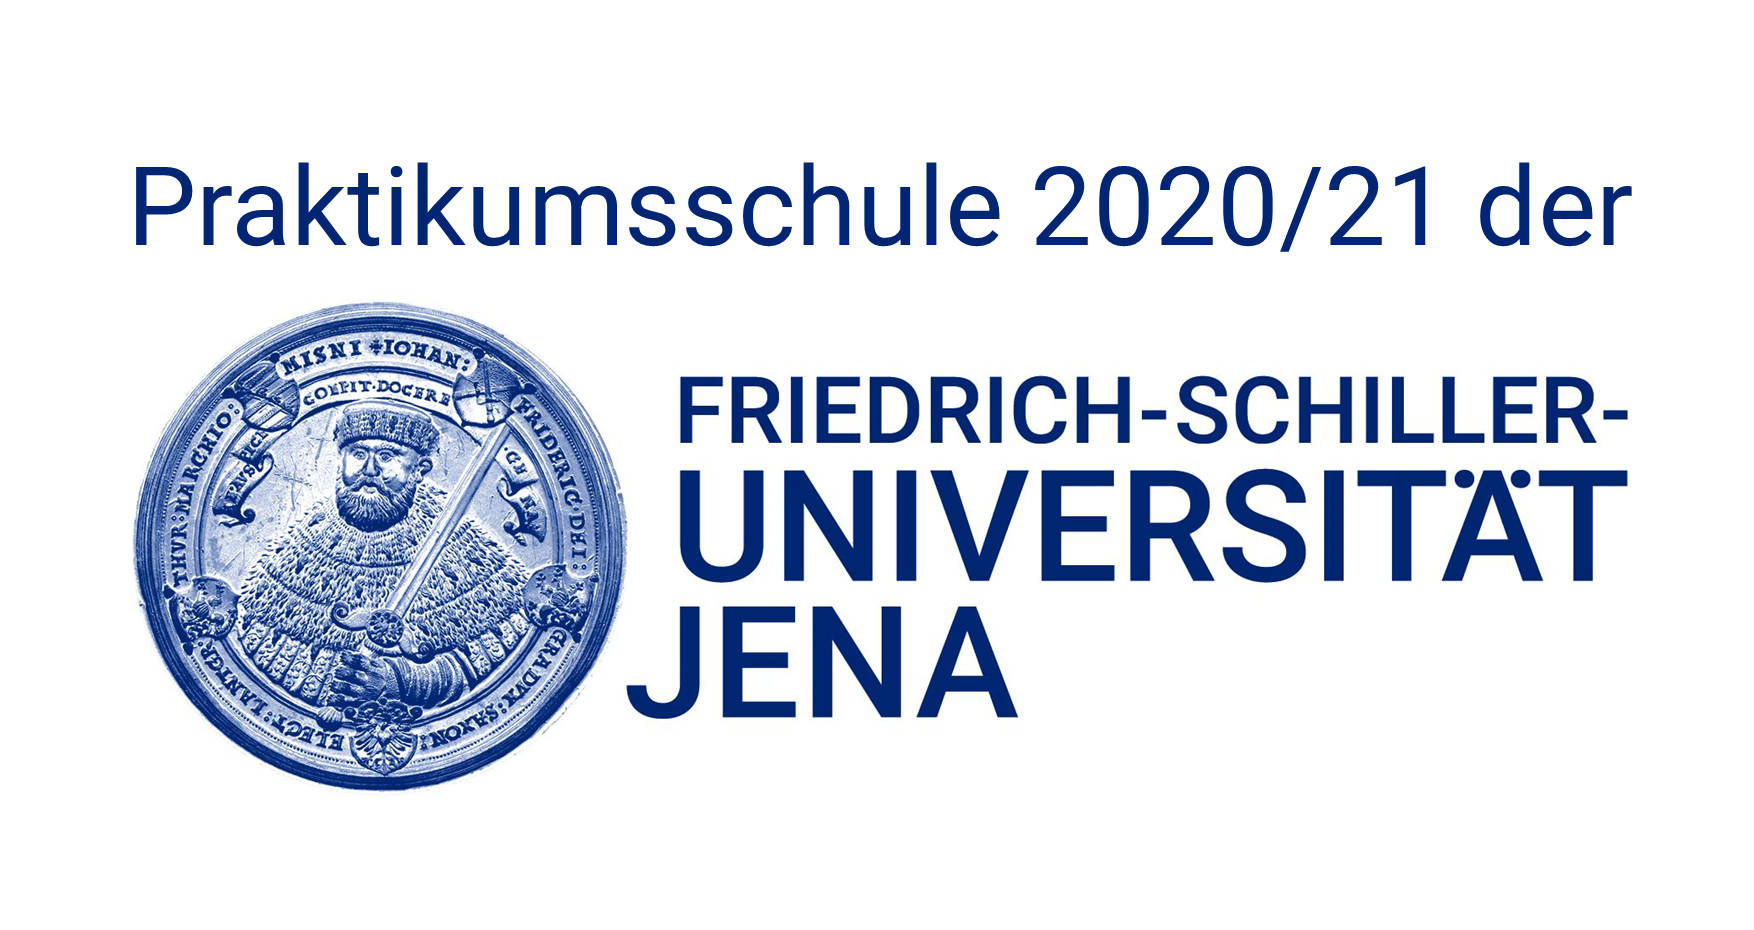 UniJena_Praktikumsschule_2020_21.png - 979,27 kB